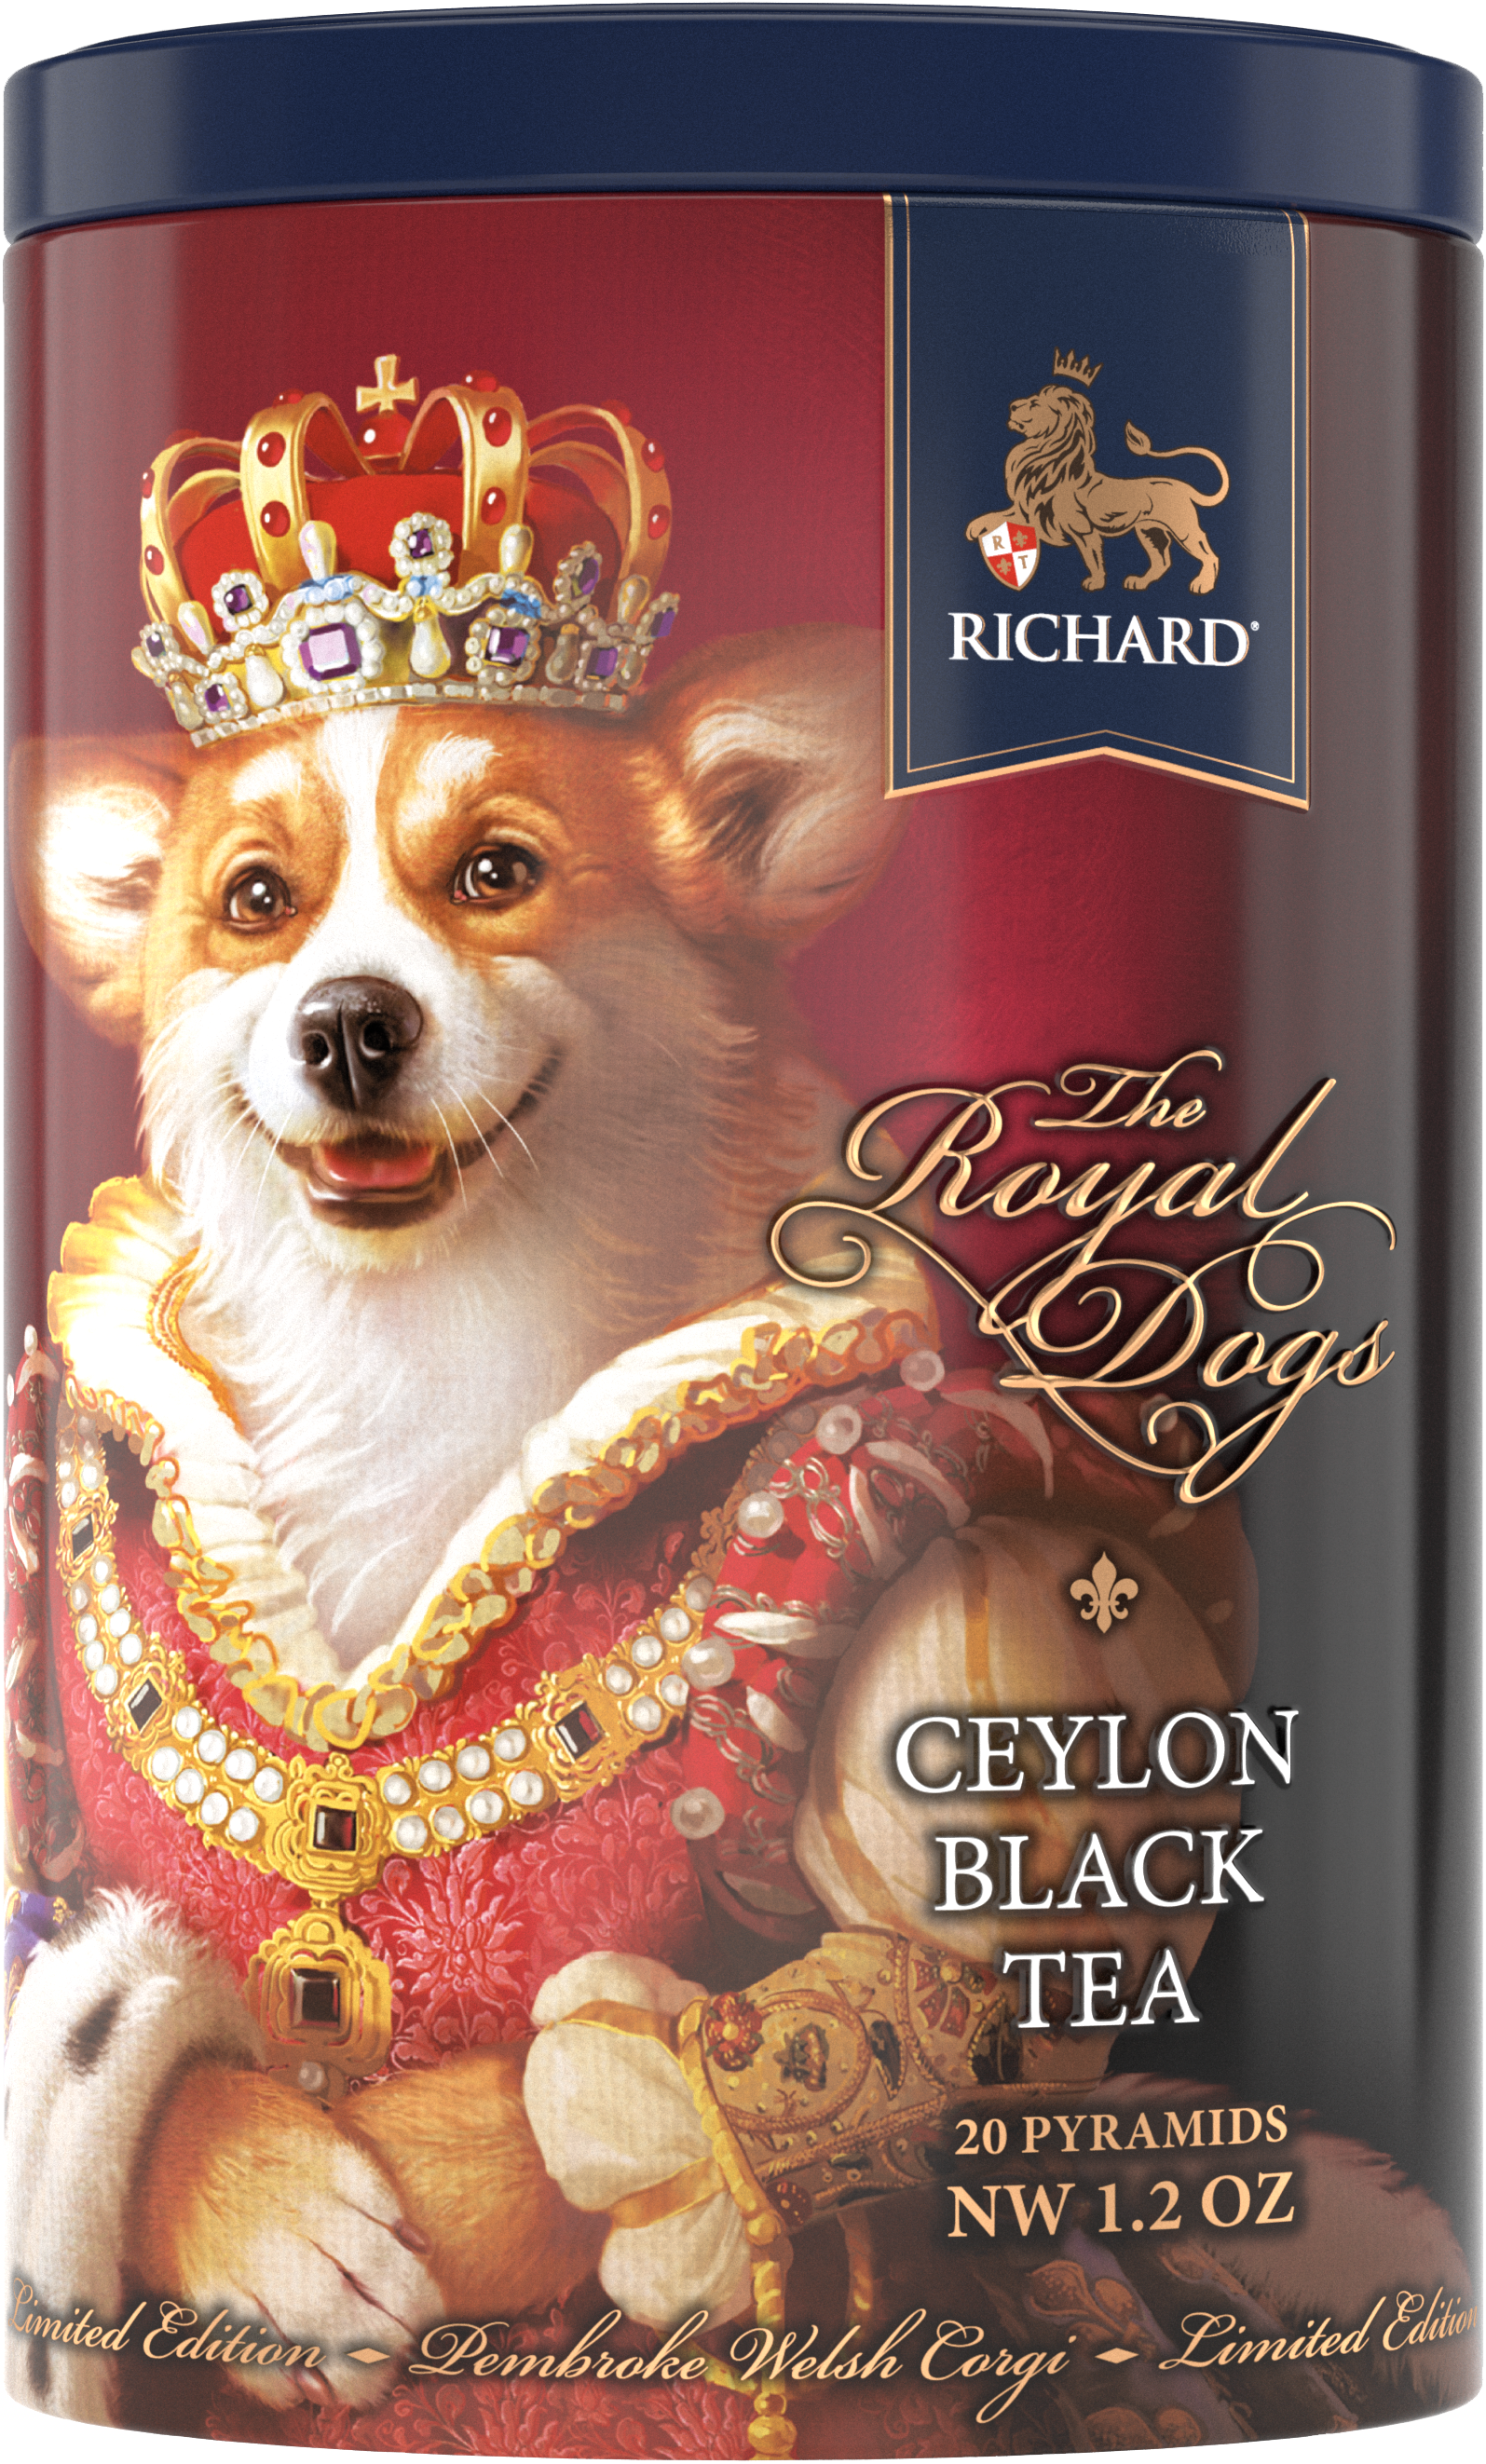 Richard Tea "Royal Dogs. Corgi", classic black tea in pyramids, 20 pyramids, 34g